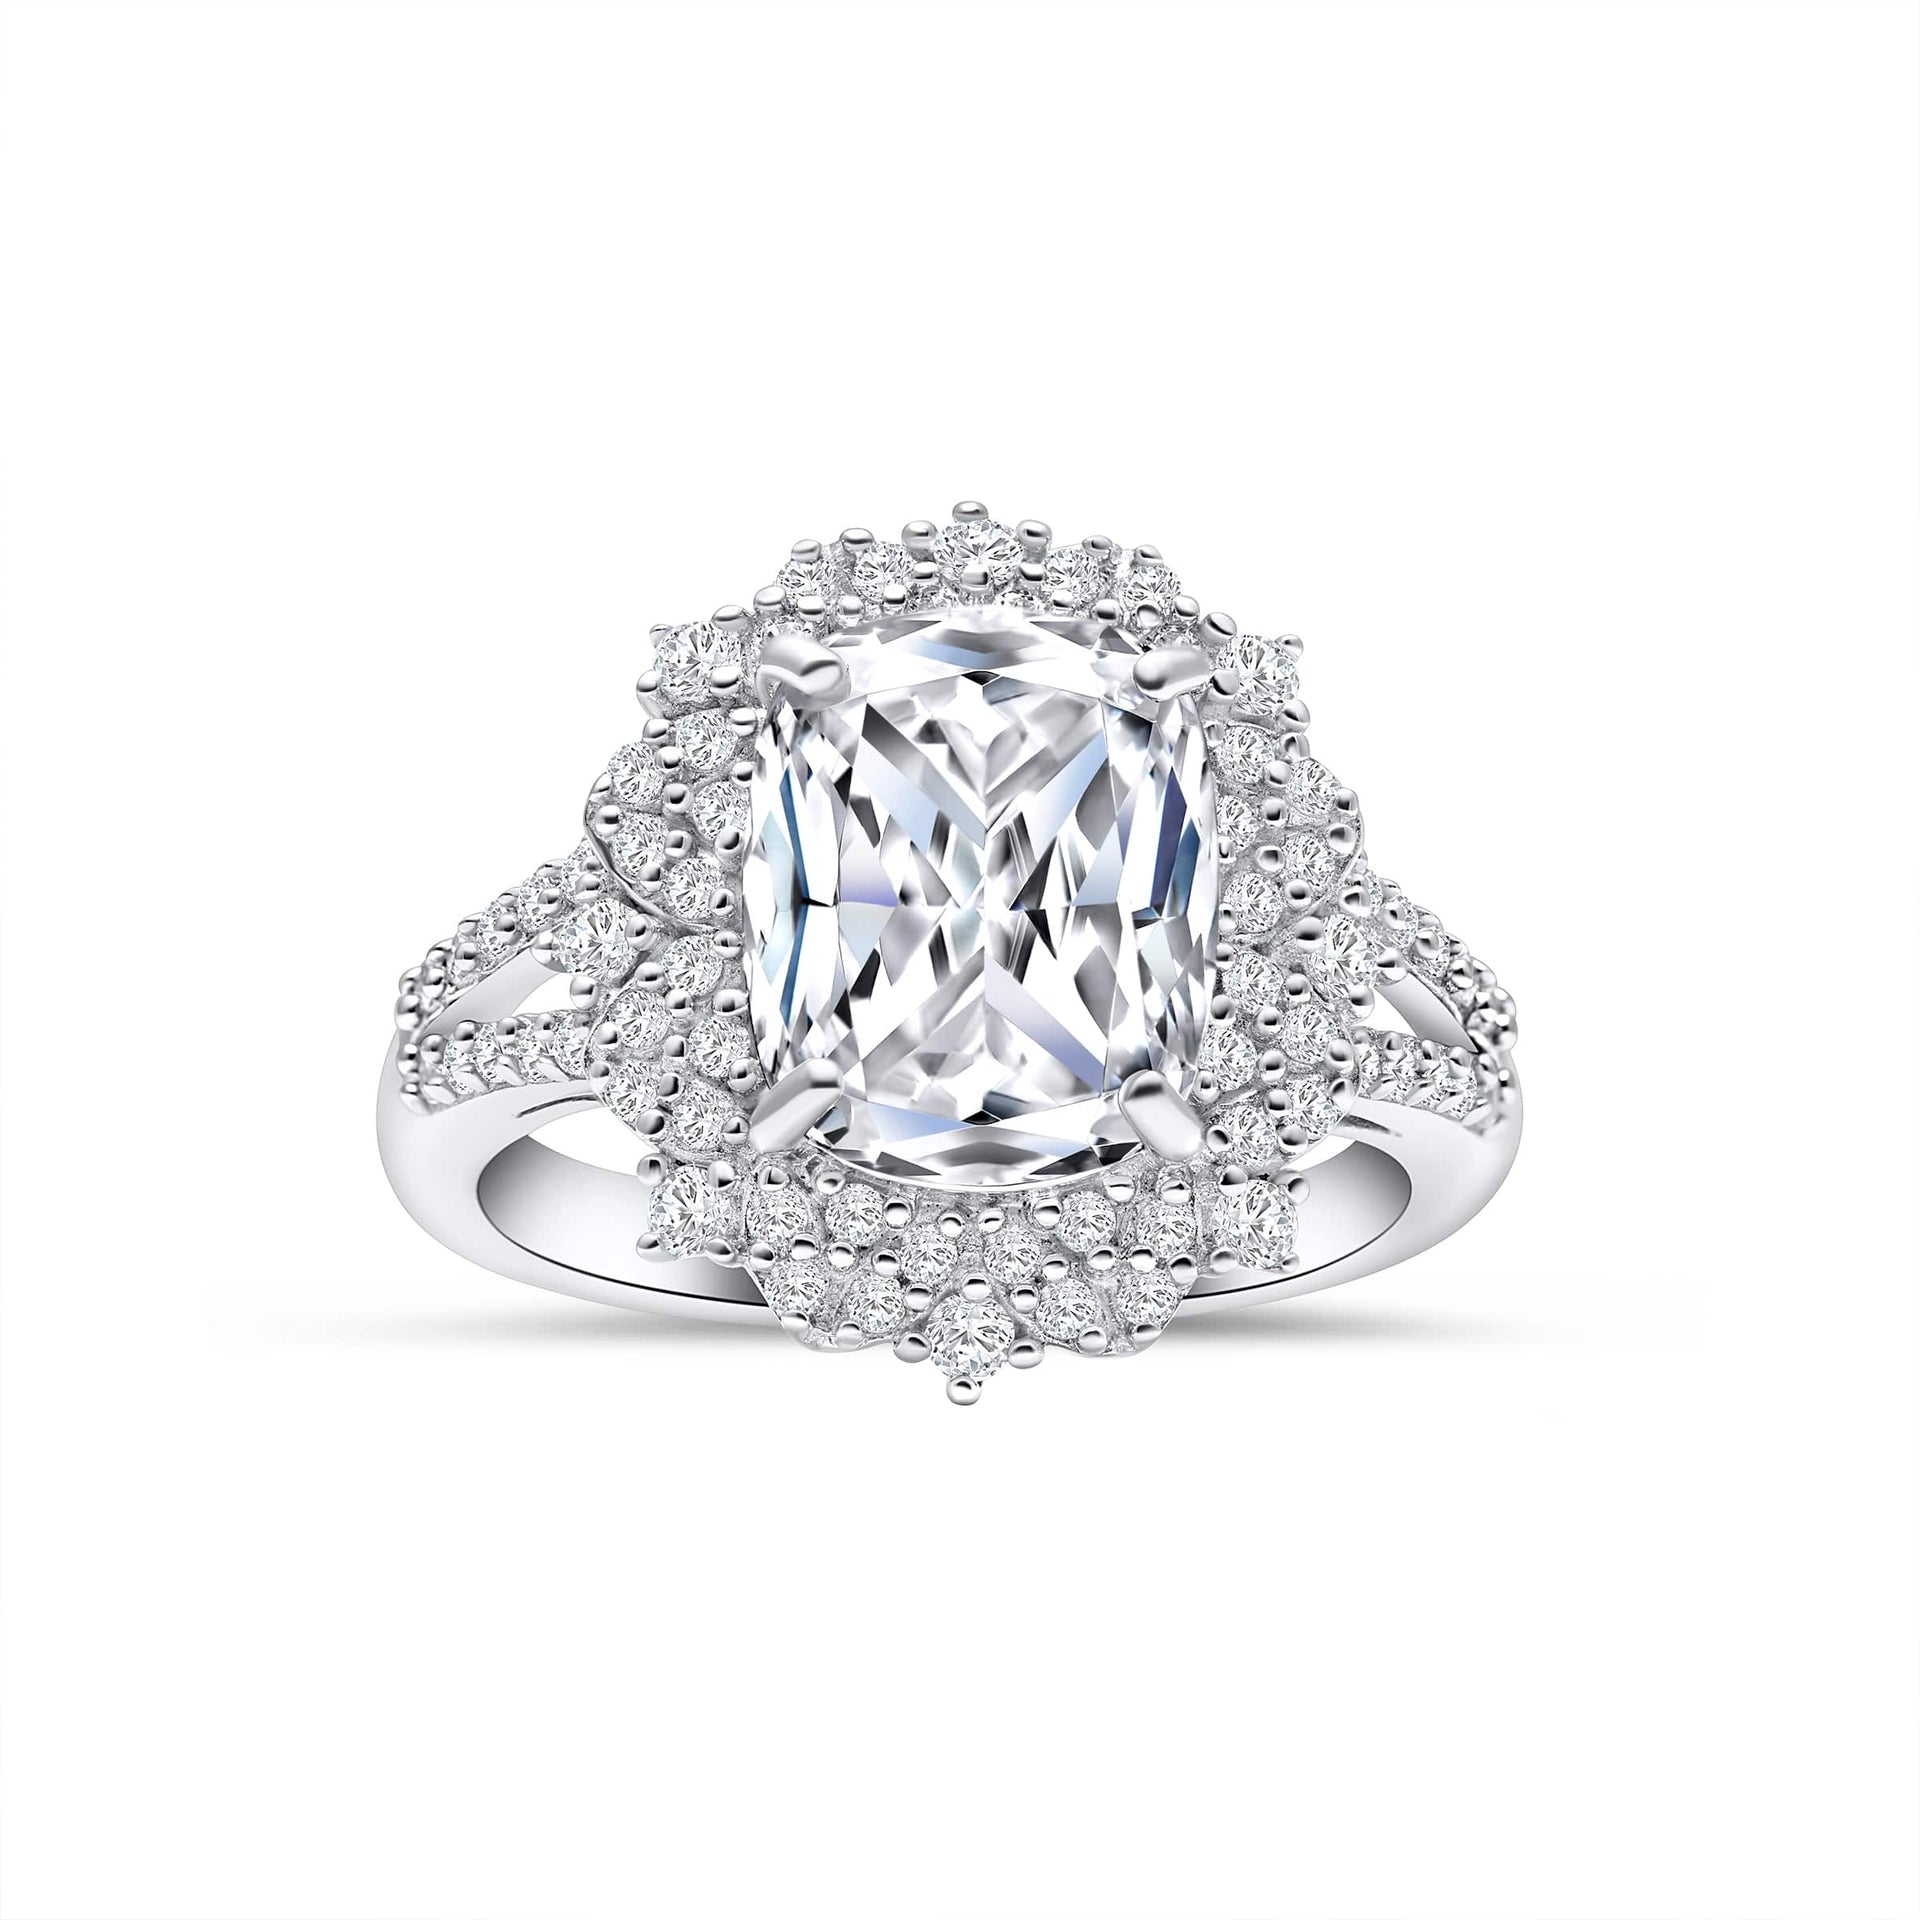 Beautiful radiant cut engagement ring